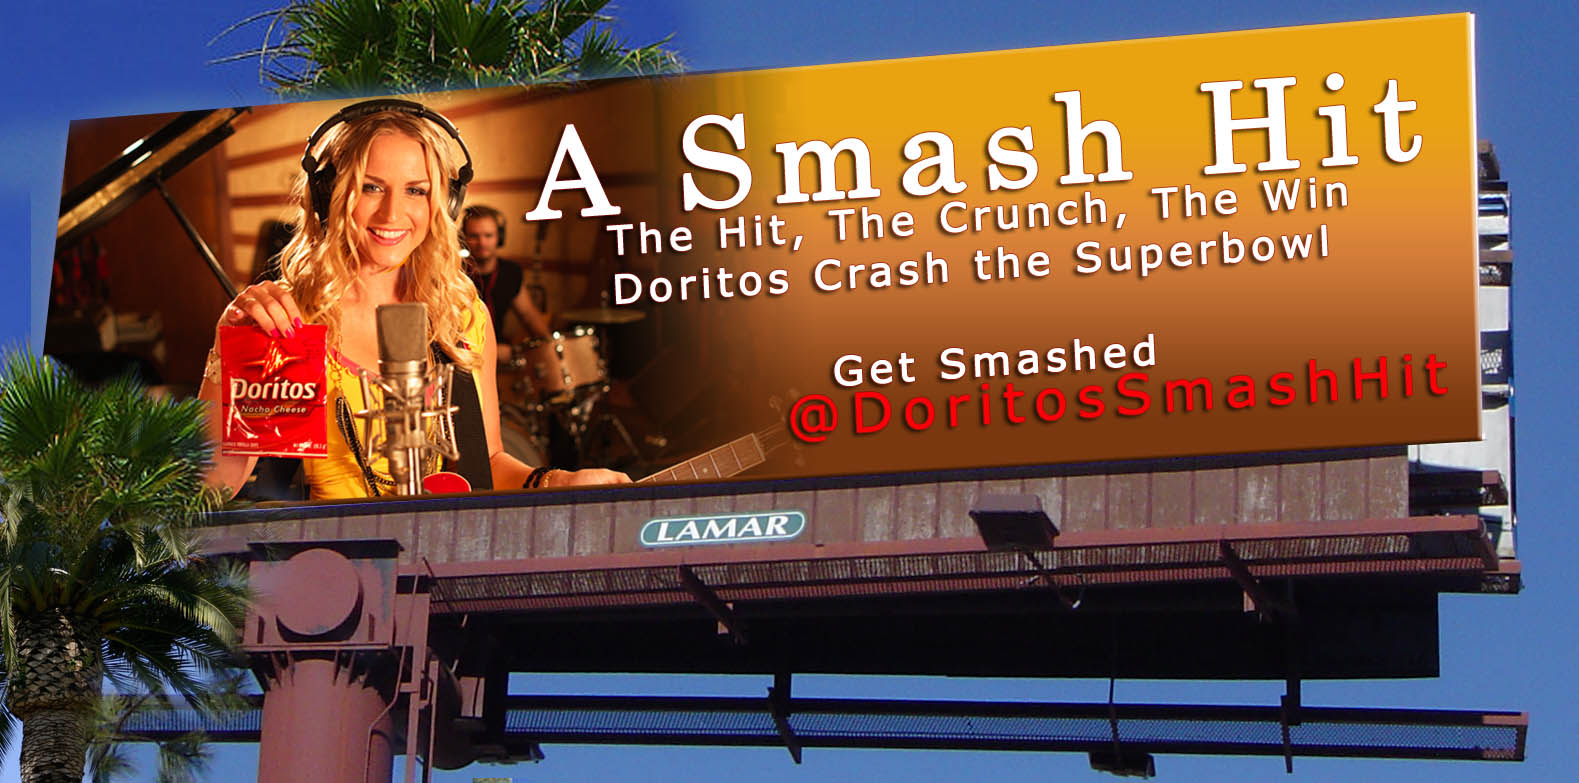 Doritos Crash the Superbowl ad by finalist winner writer-director Chris Armstrong